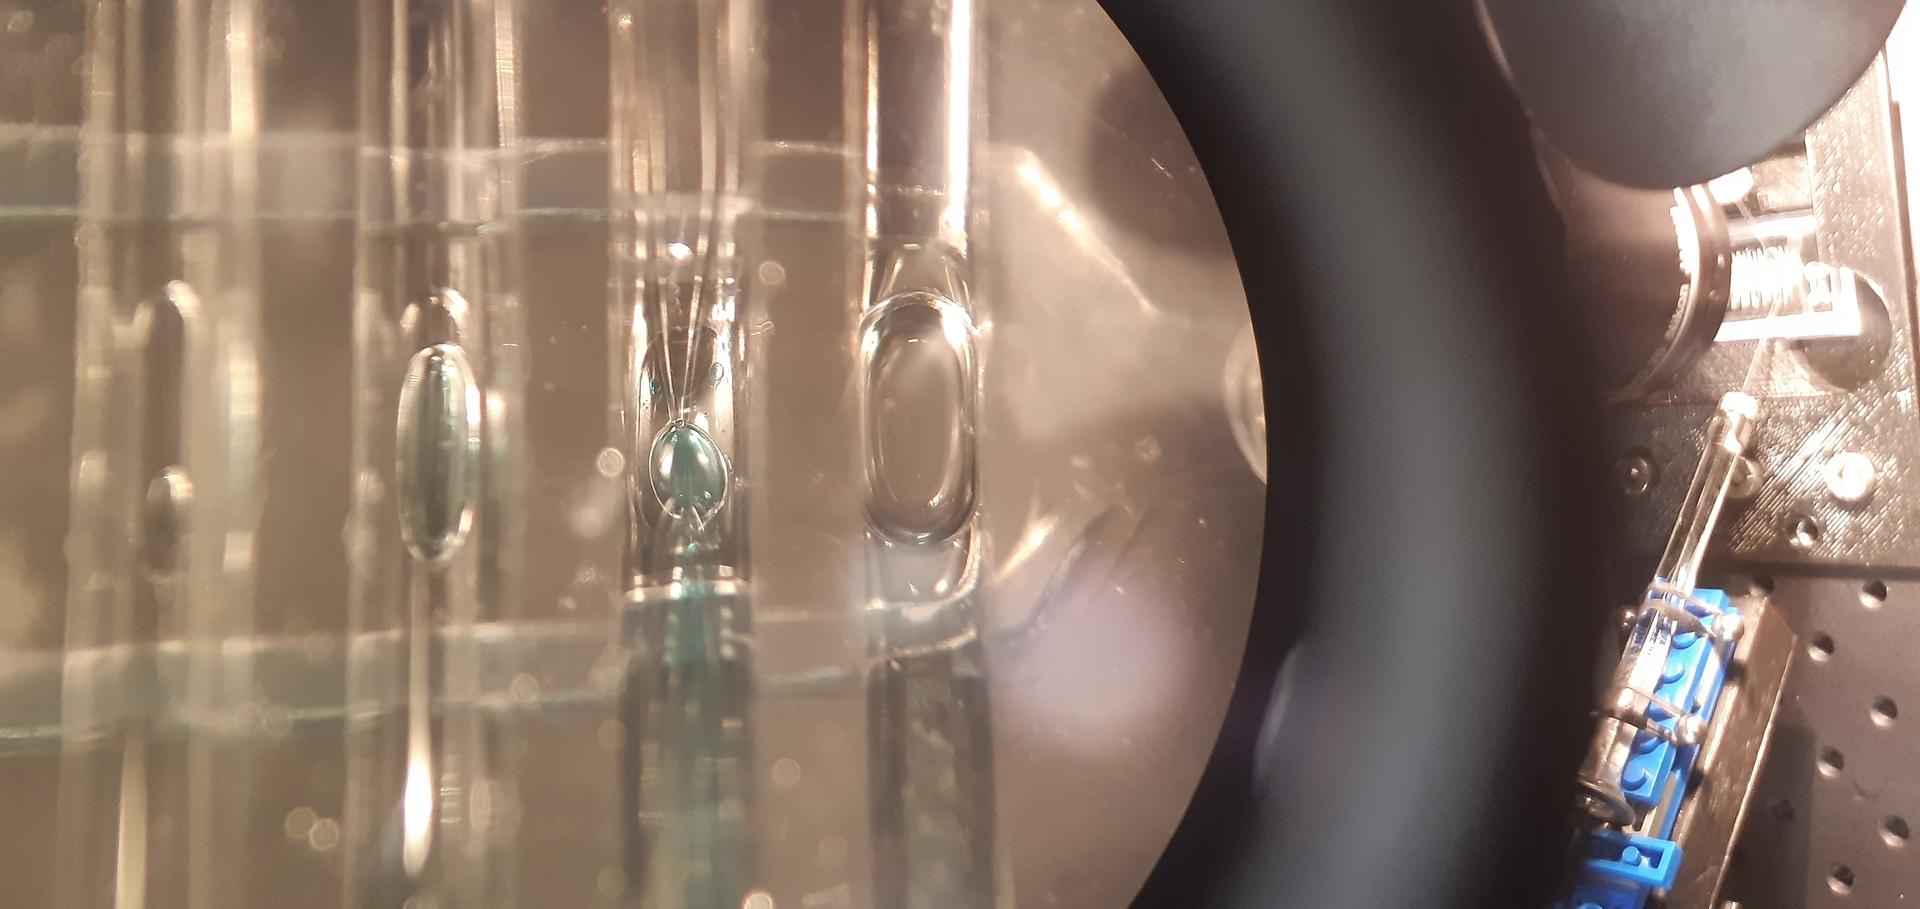 A microfluidic chip viewed through a microscope